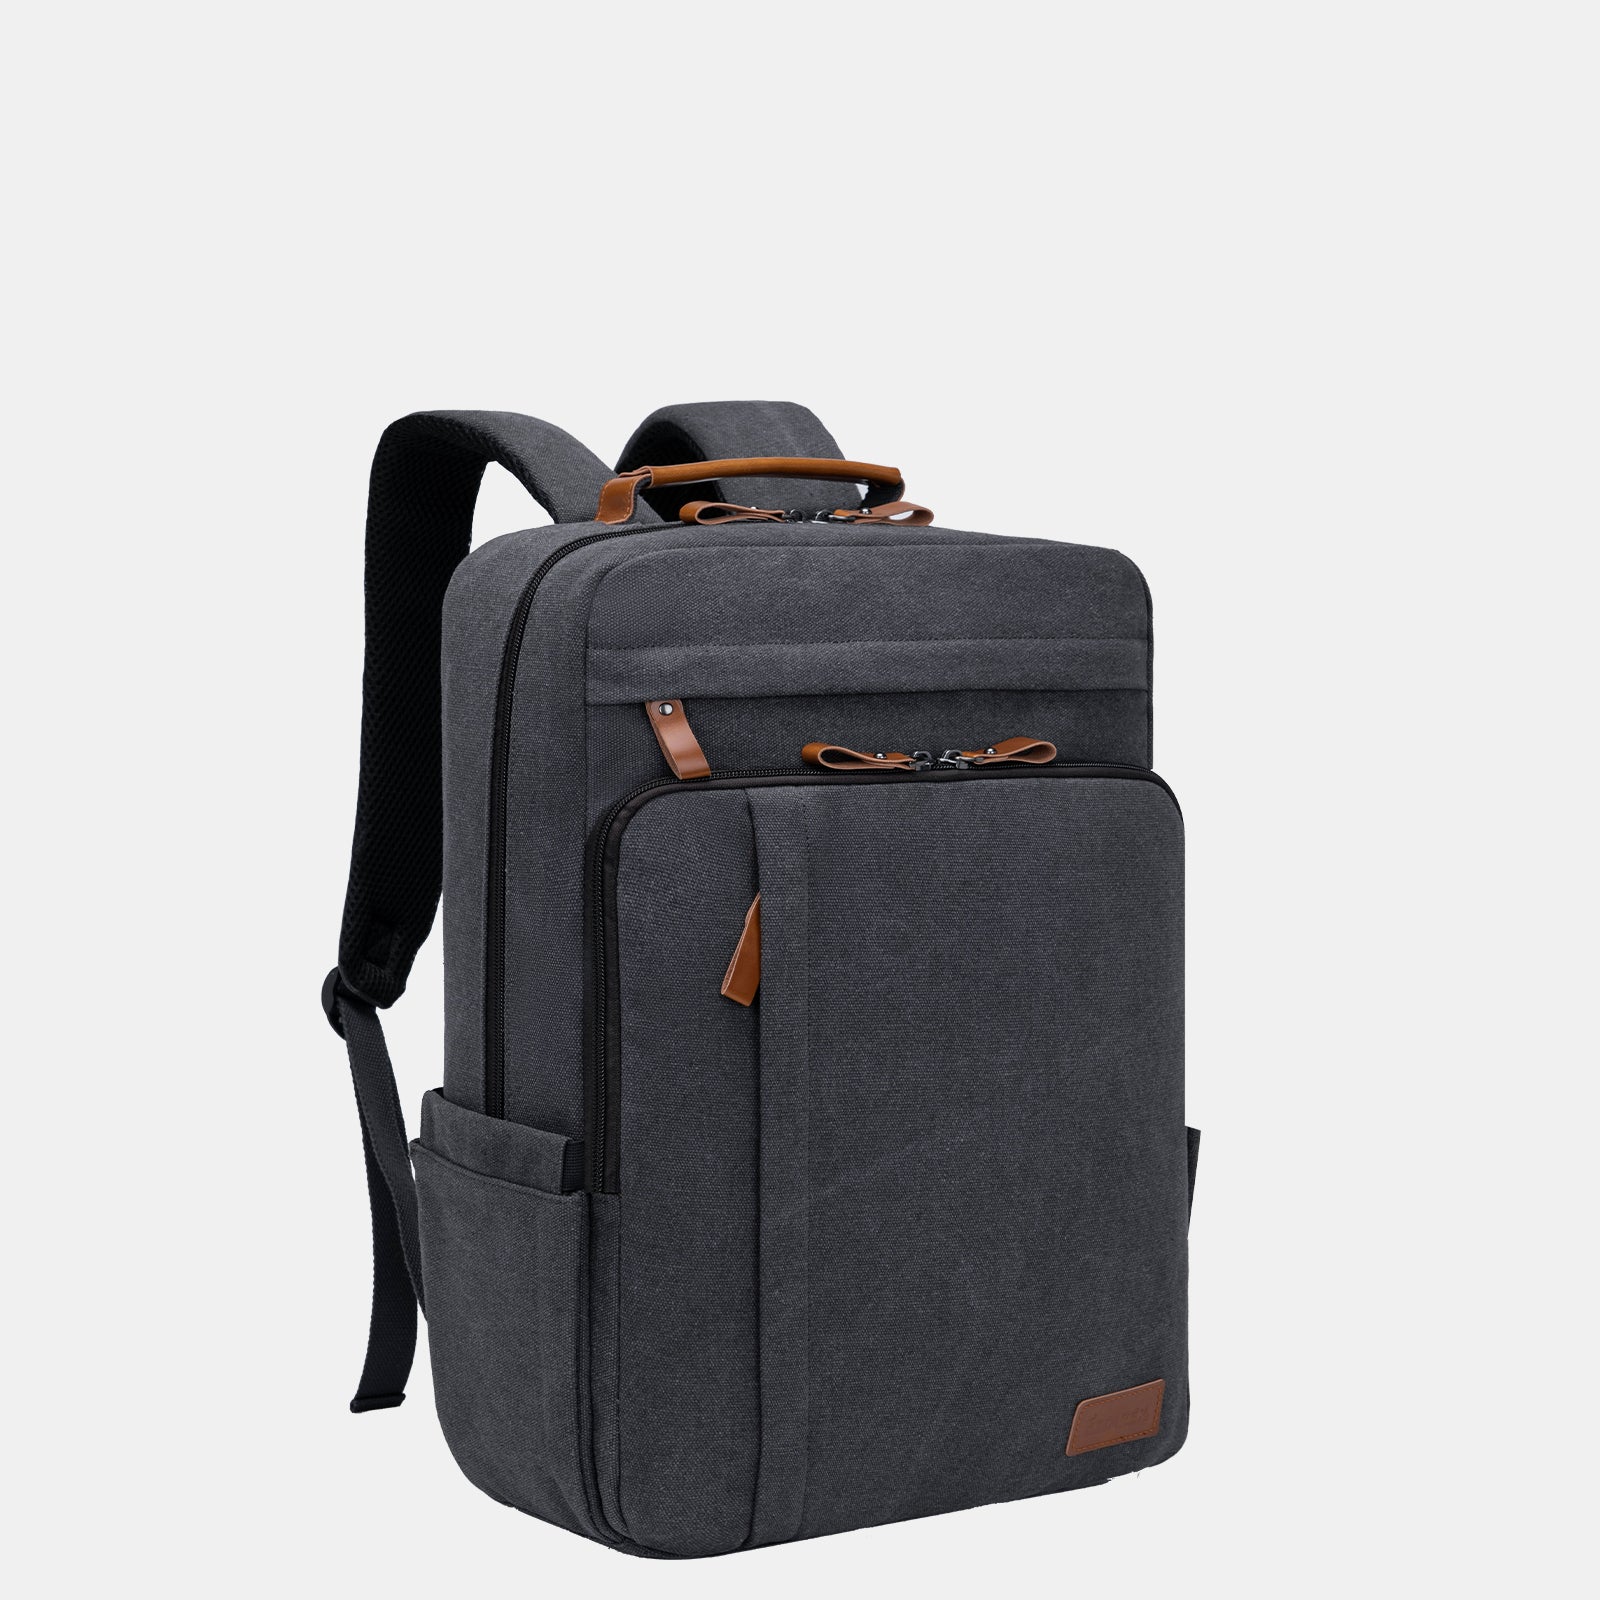 Estarer Dark Grey Canvas Laptop Backpack 17 Inch